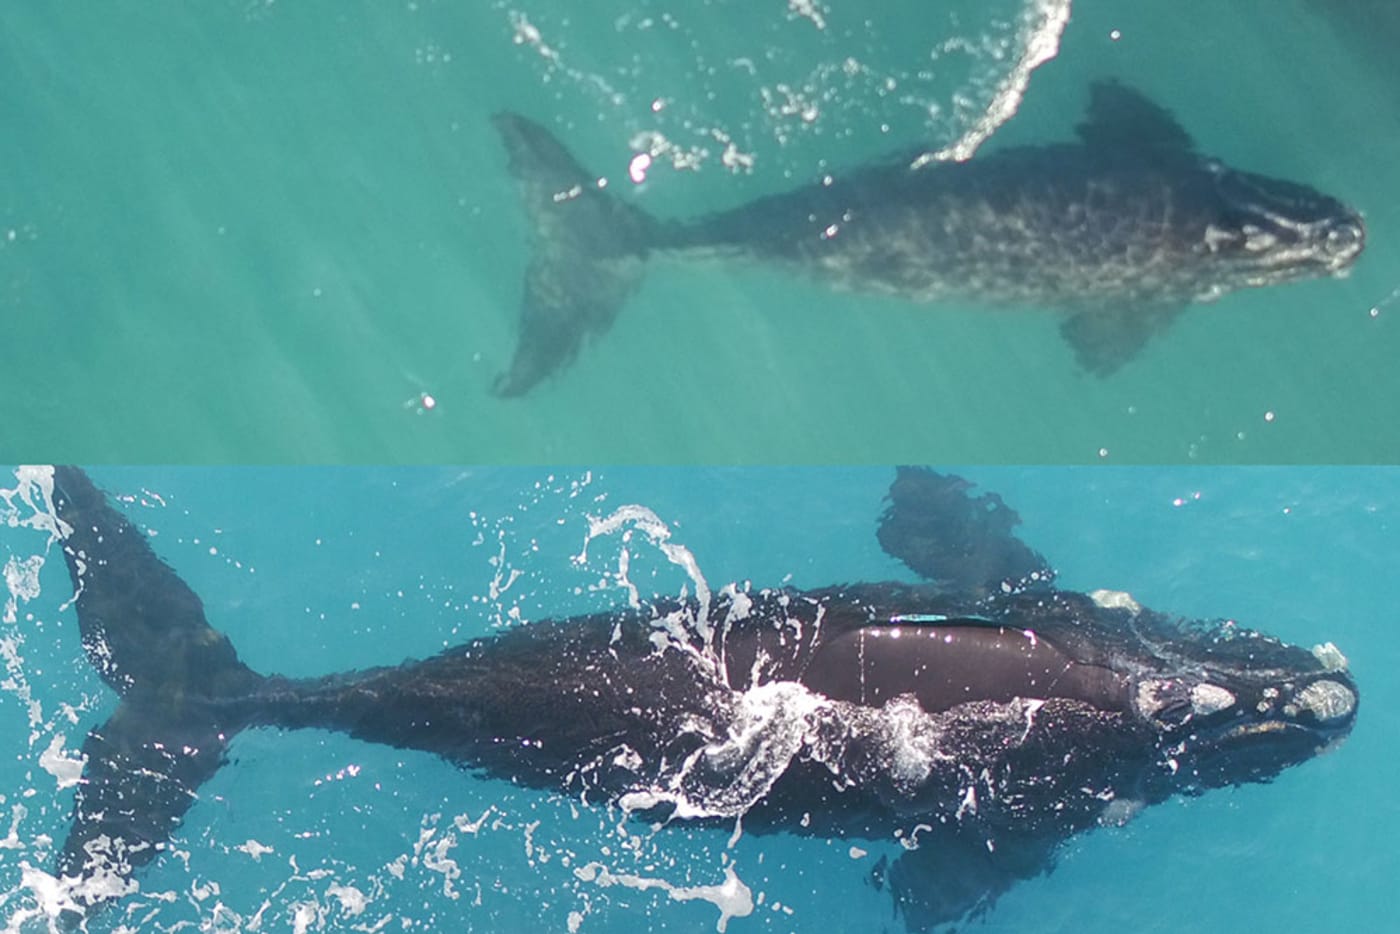 Bella's calf= Southern right whale (composite image)